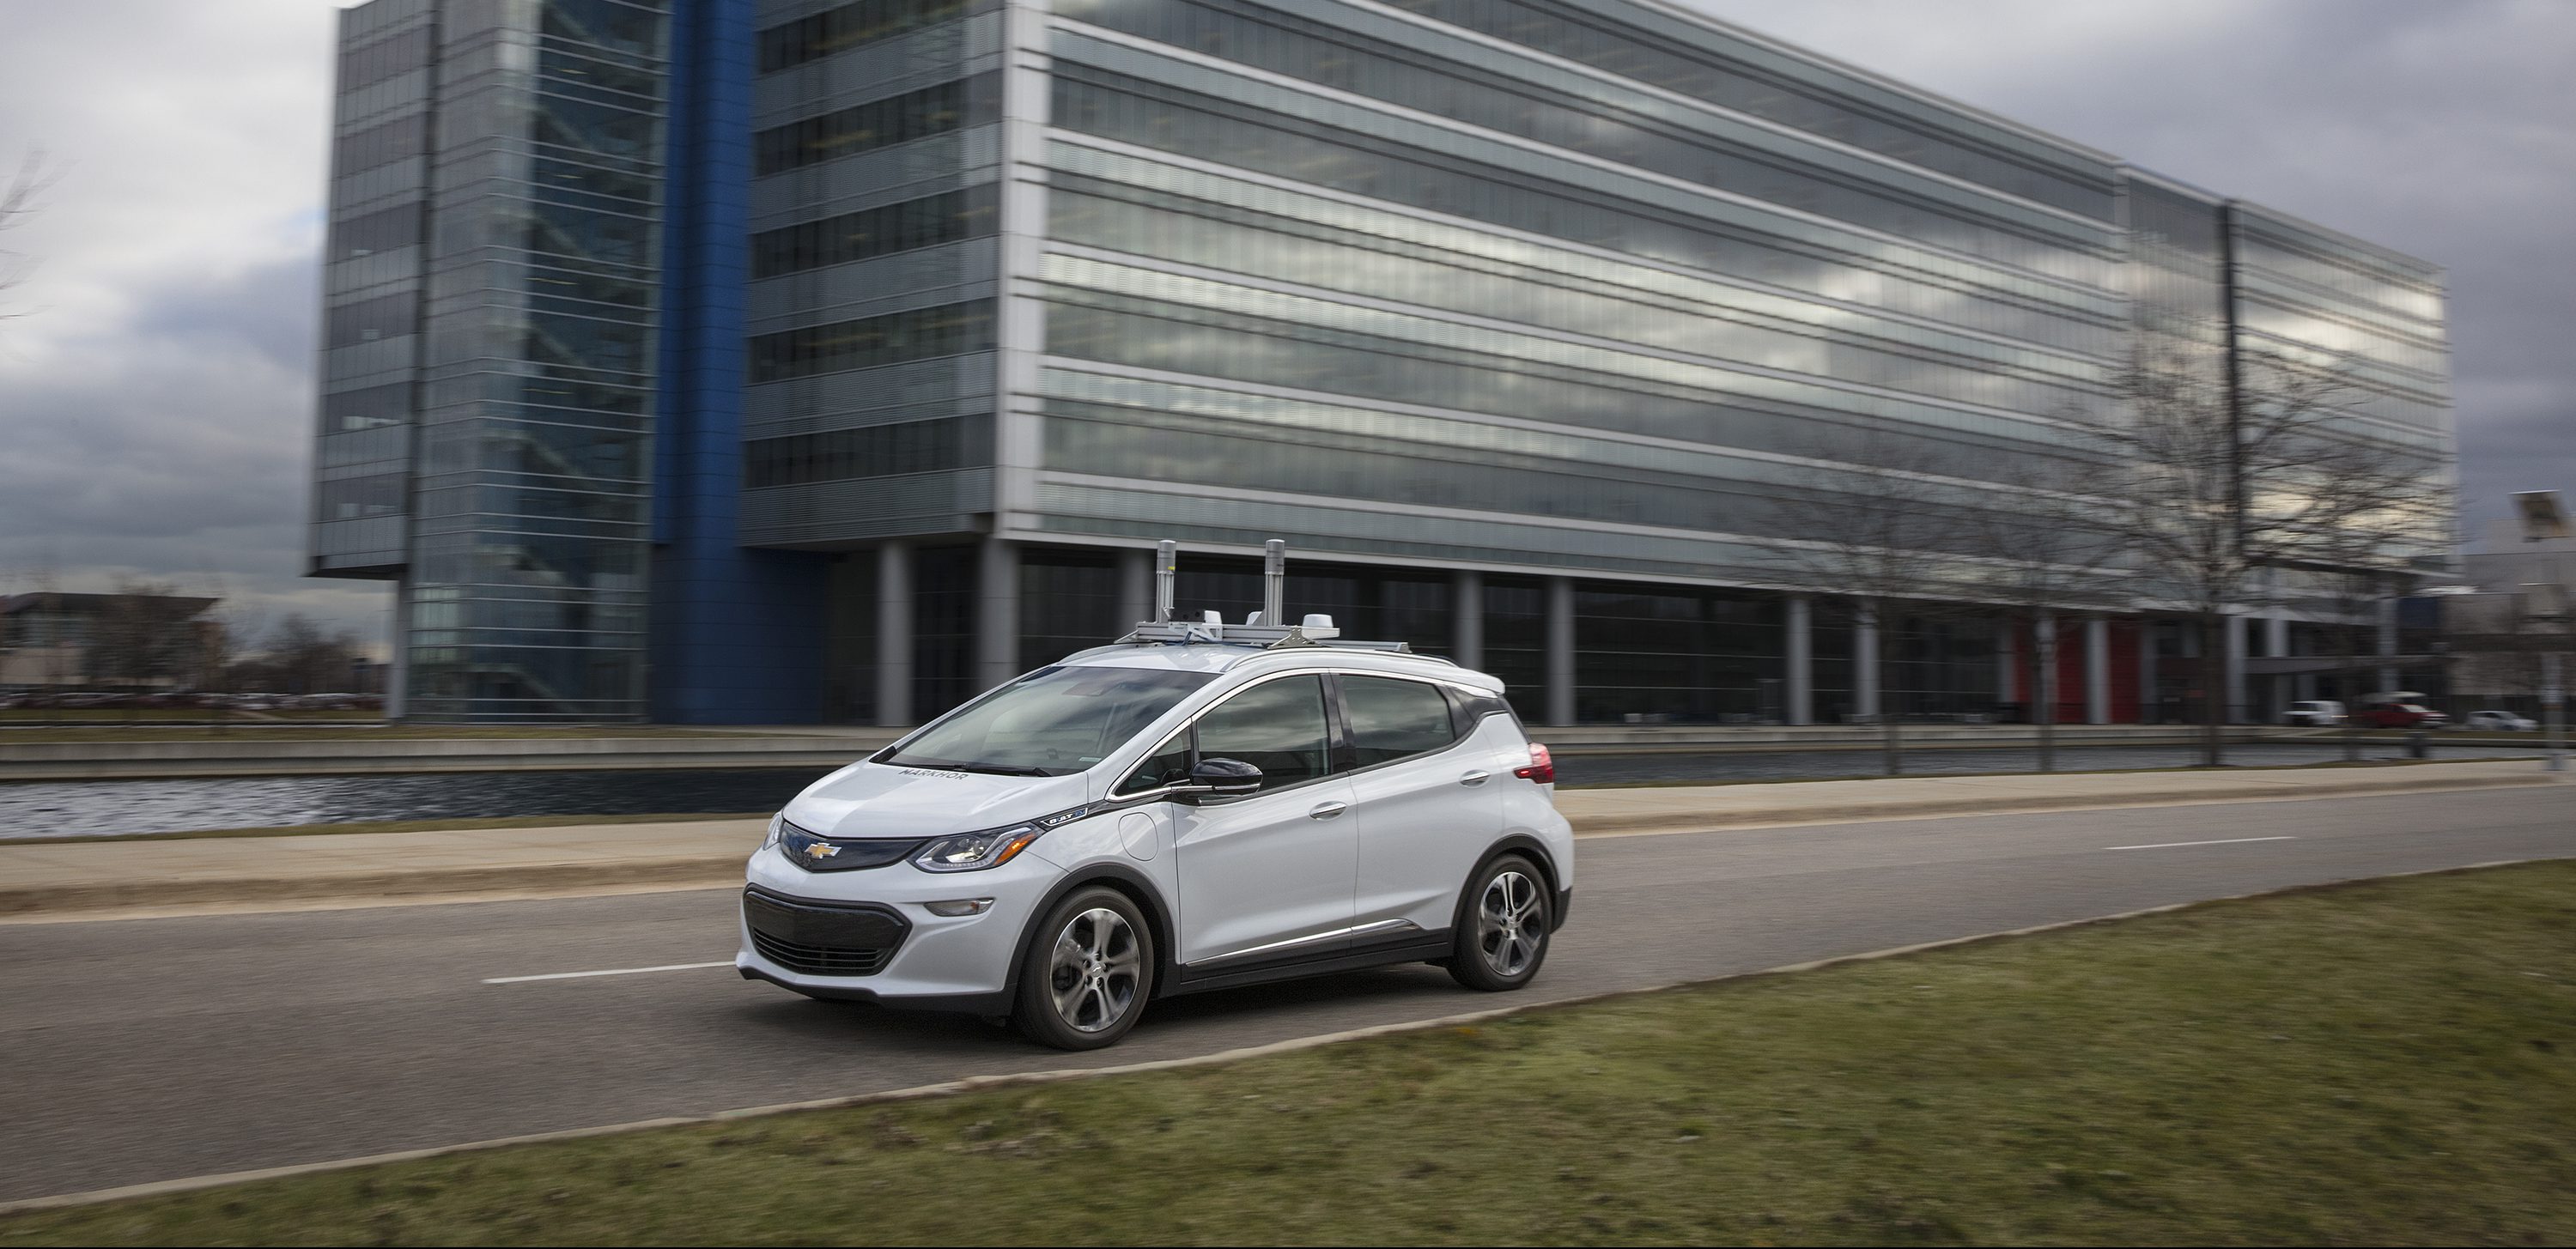 General Motors has begun testing fully autonomous development fleet vehicles on public roads in Michigan, starting with roads nearby its Technical Center in Warren.